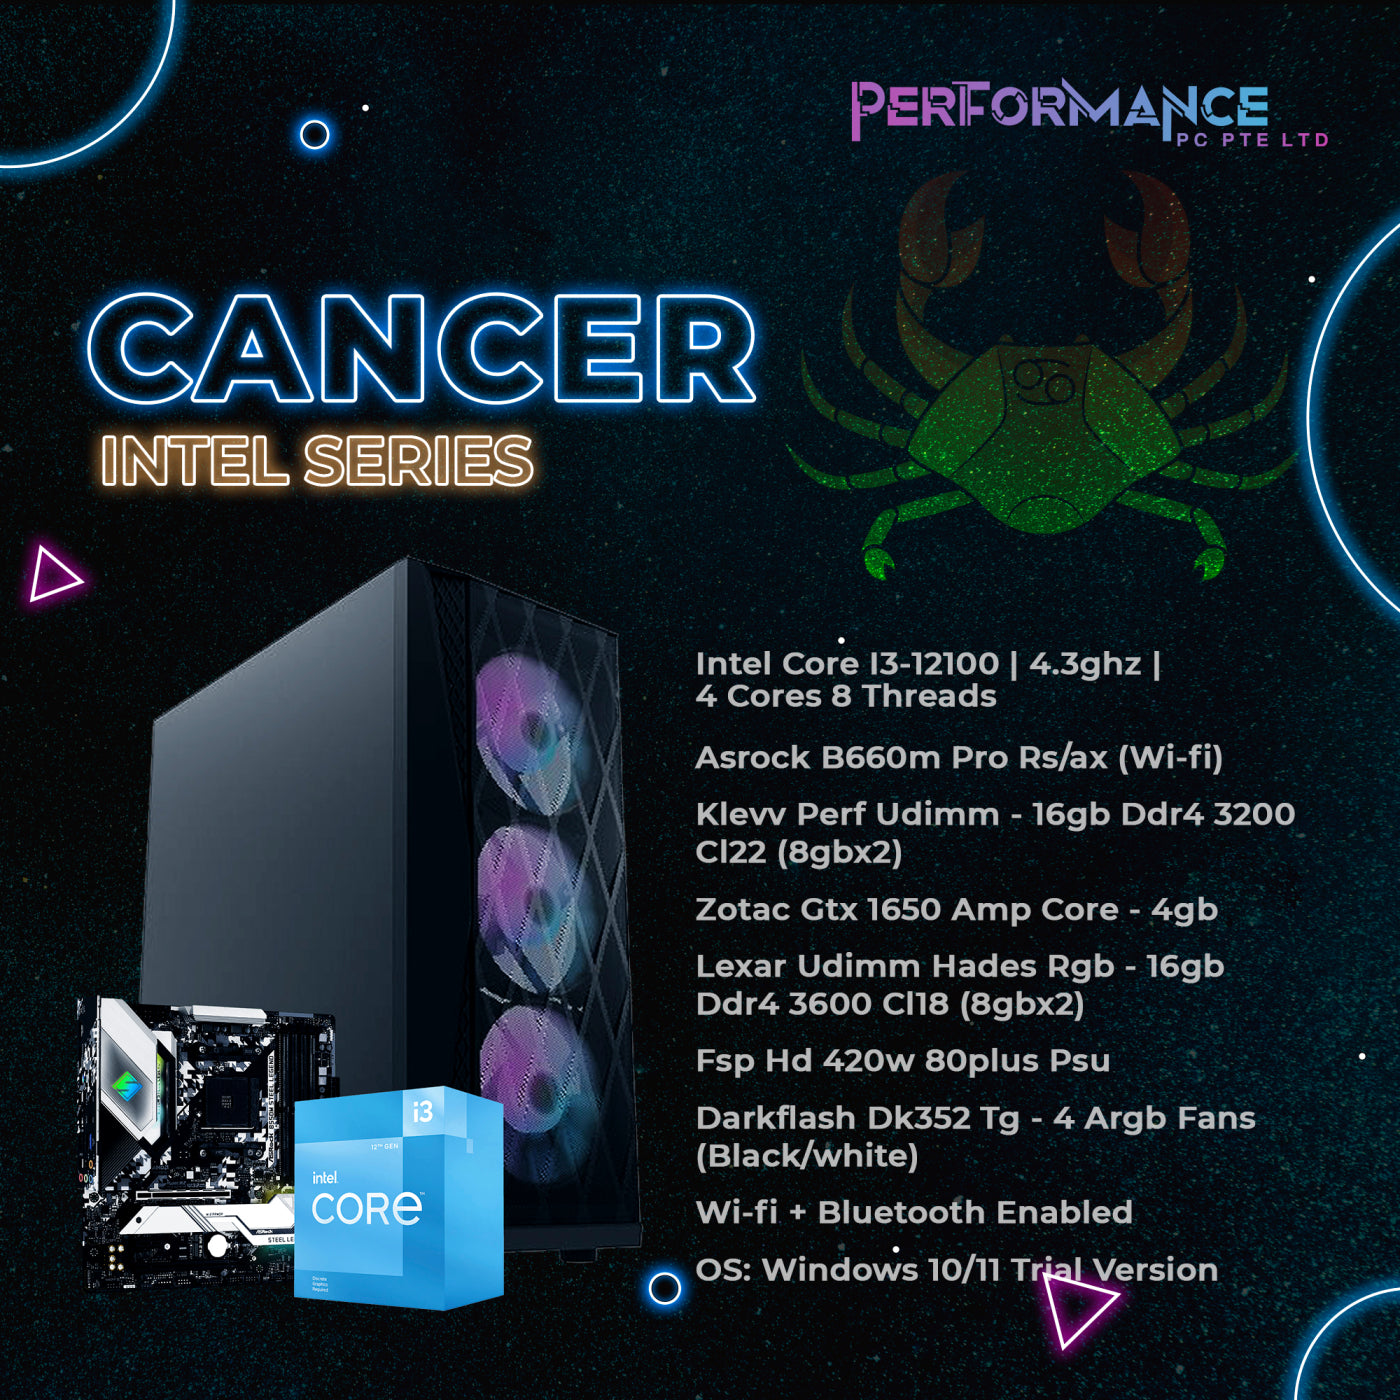 Zodiac Gaming Pc Bundle - Office Desktop / Student Desktop PC - CANCER (LOCAL WARRANTY 3 YEARS BY PERFORMANCE PC PTE LTD)